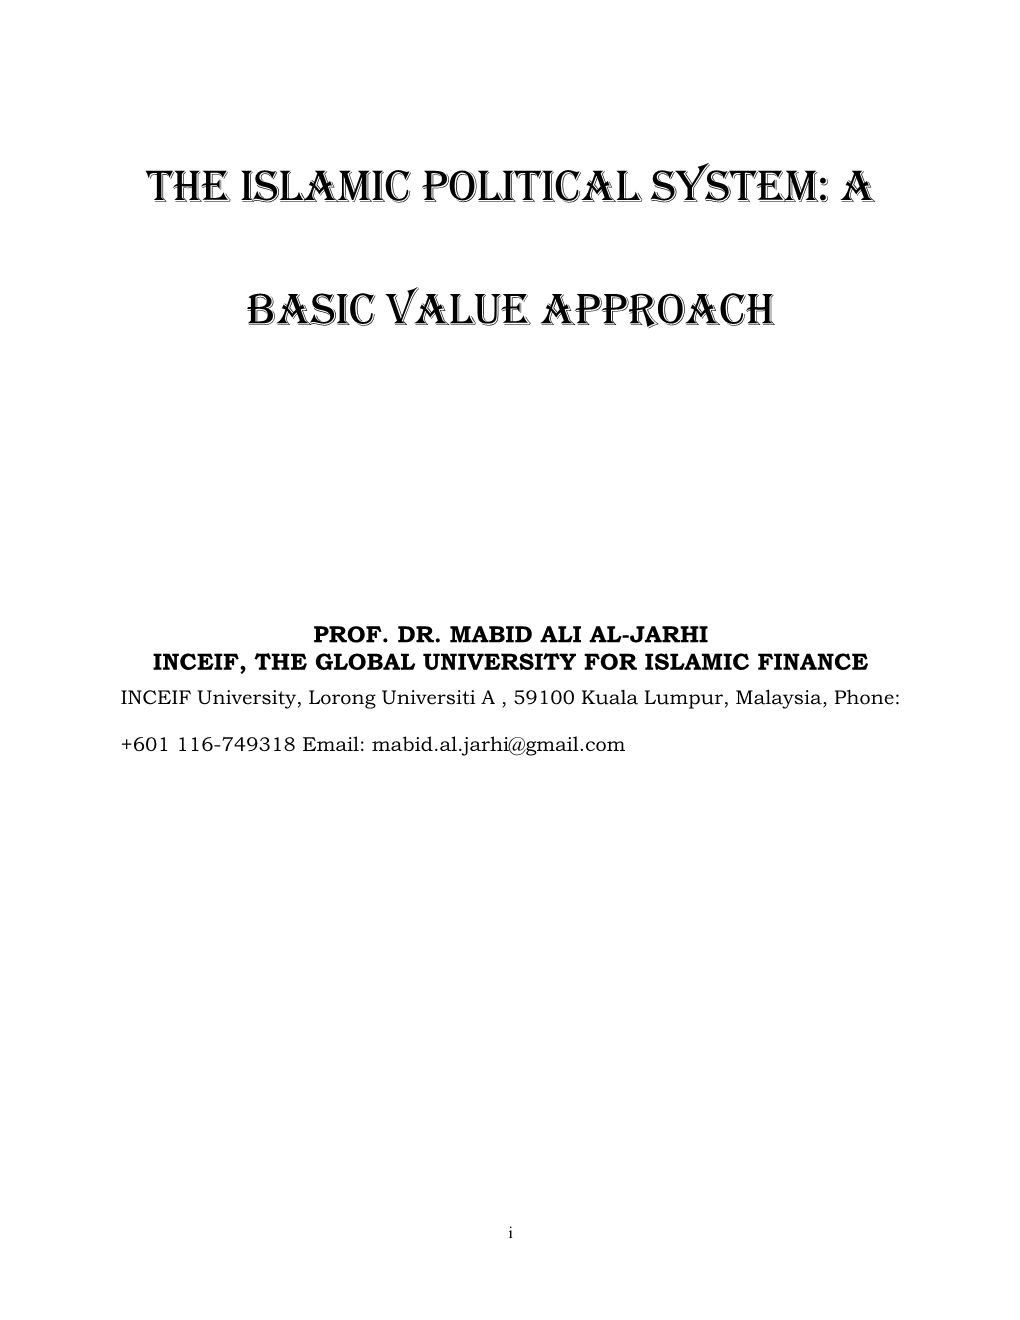 The Islamic Political System: A